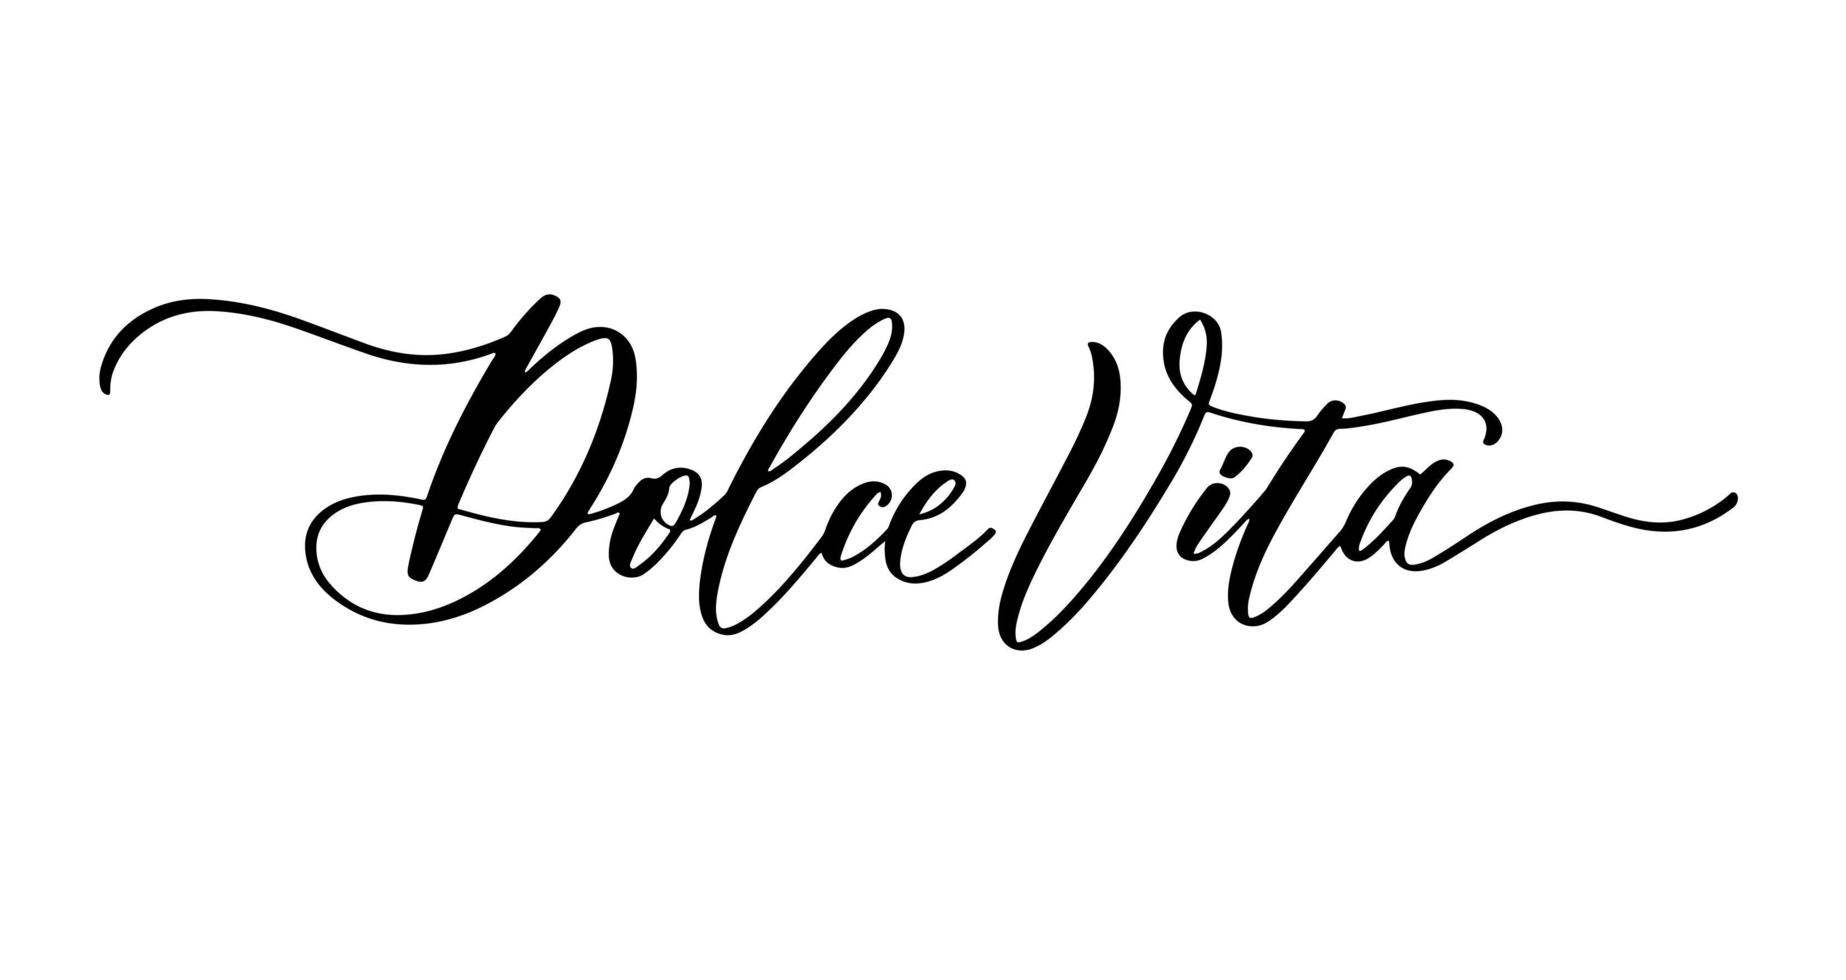 Dolce vita. Lettering inscription. Design element for greeting card, t shirt, poster. vector